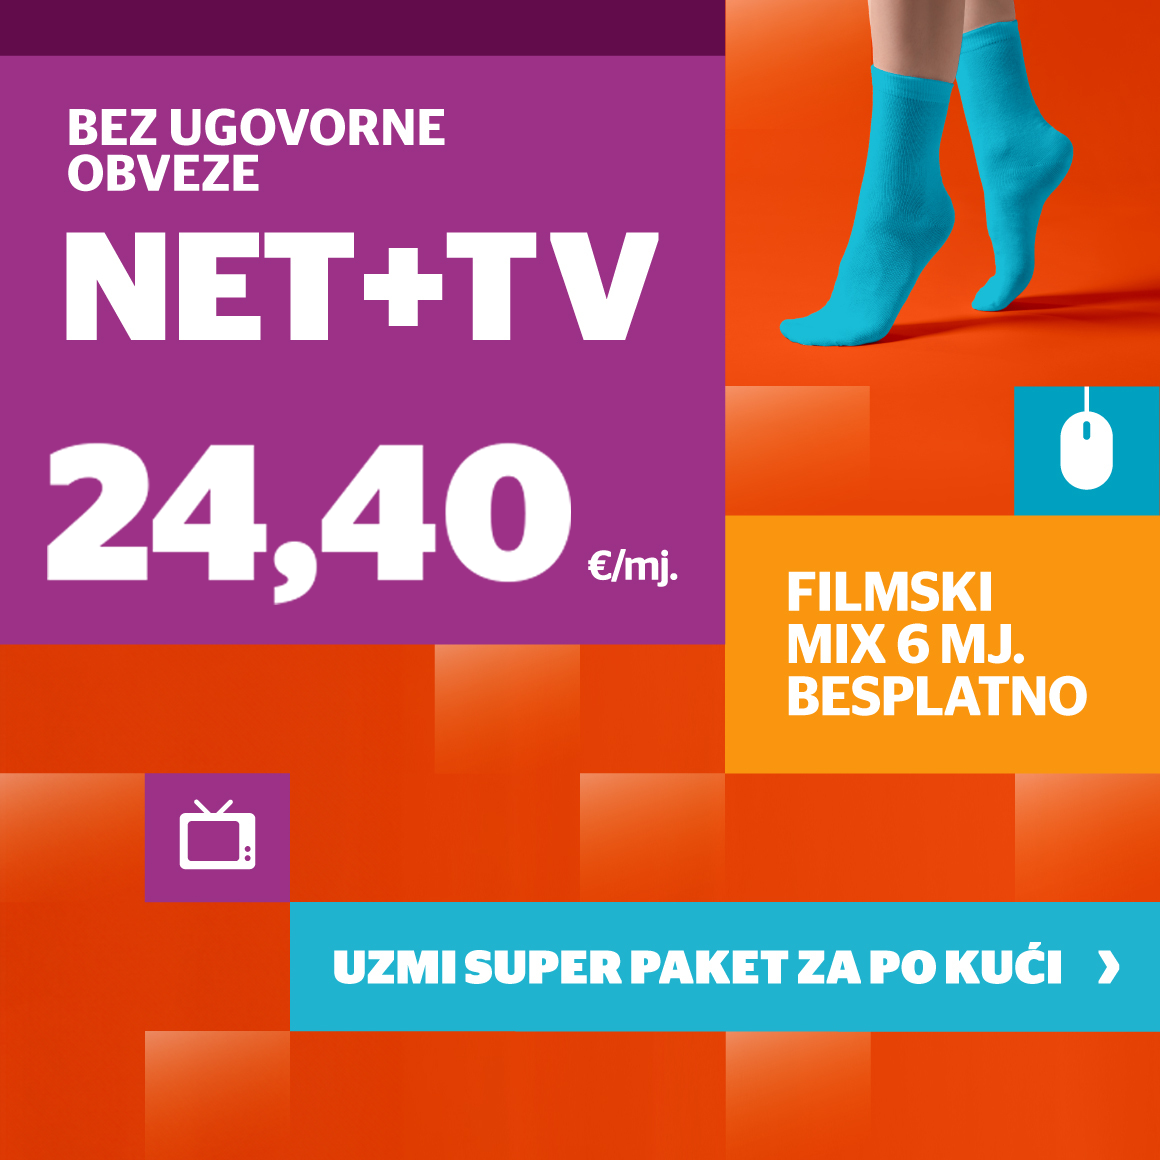 NET+TV paket bez ugovorne obveze